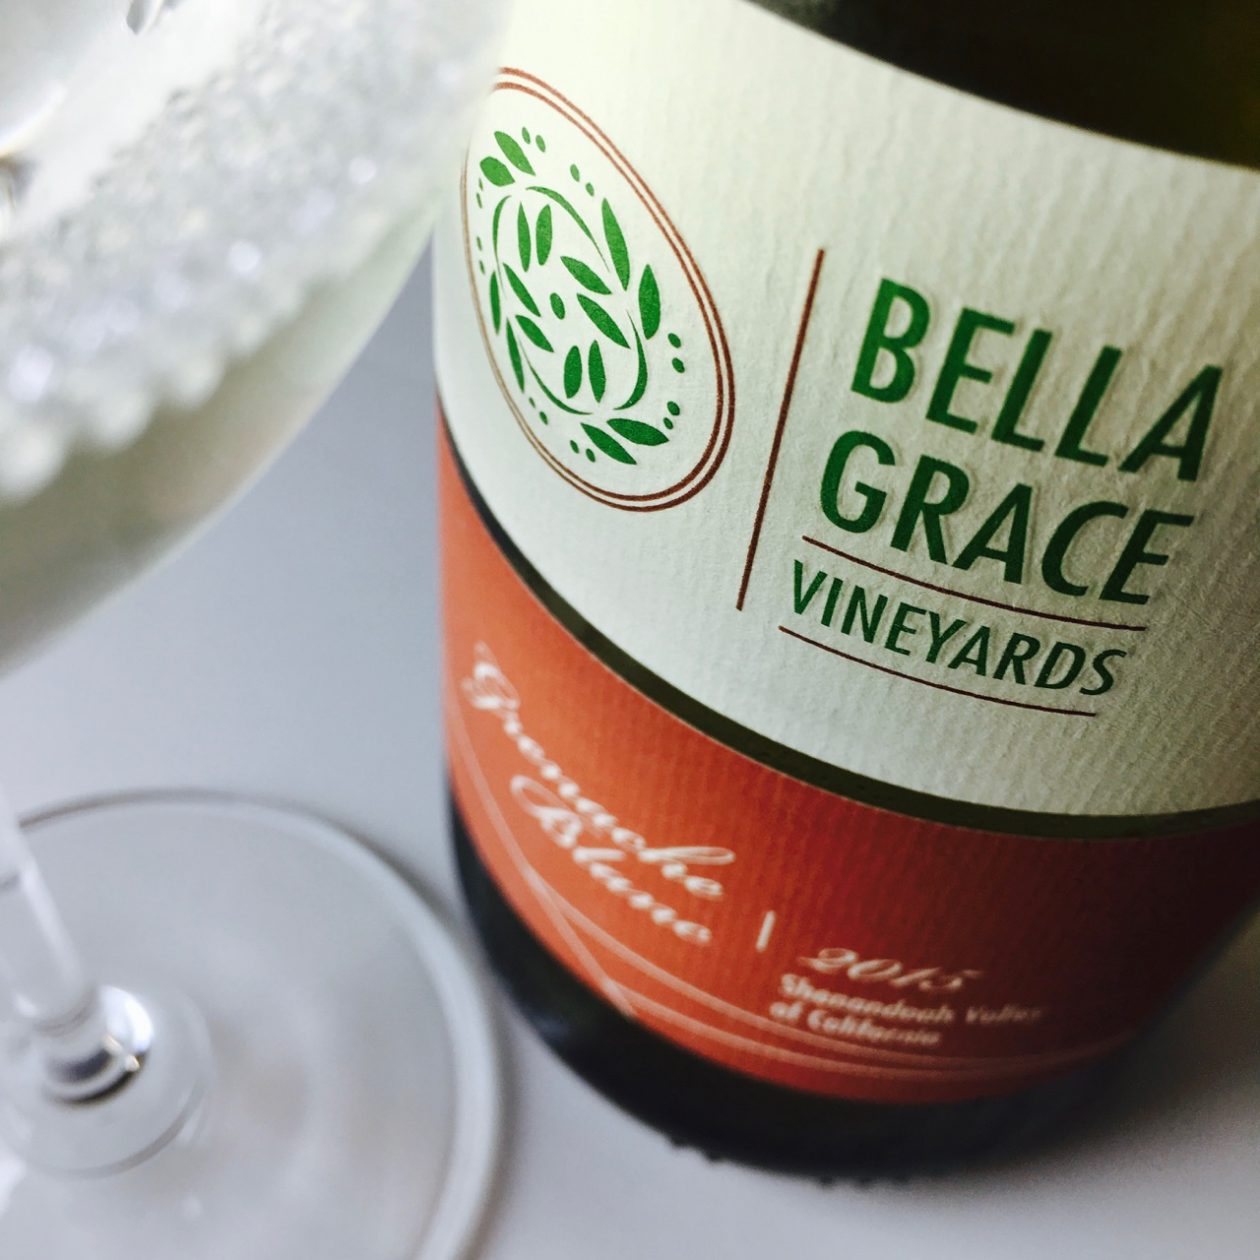 2015 Bella Grace Vineyards Grenache Blanc Amador County